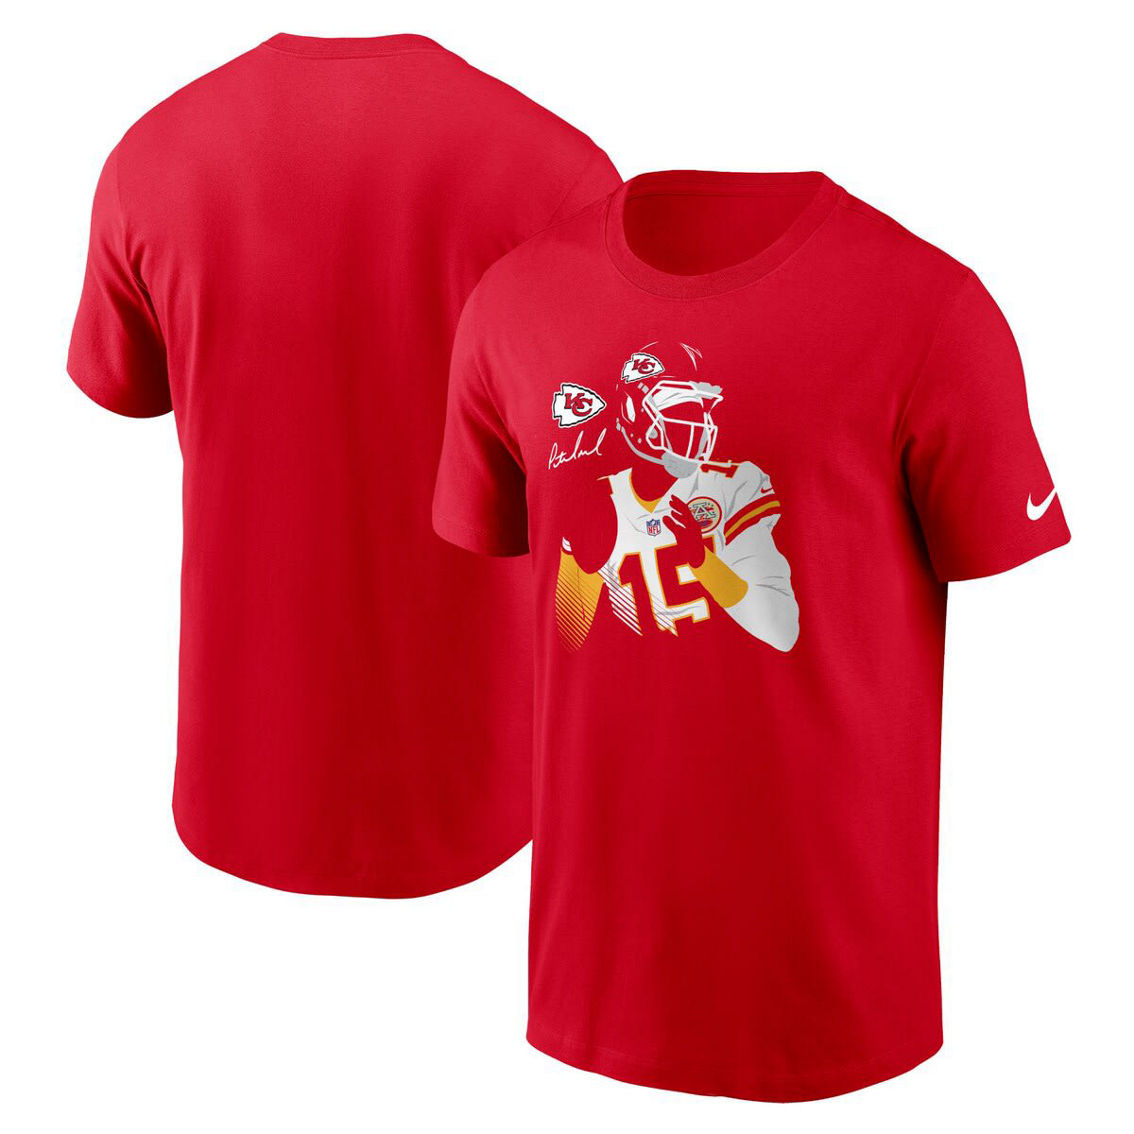 Nike Men's Patrick Mahomes Red Kansas City Chiefs Player Graphic T-Shirt - Image 2 of 4